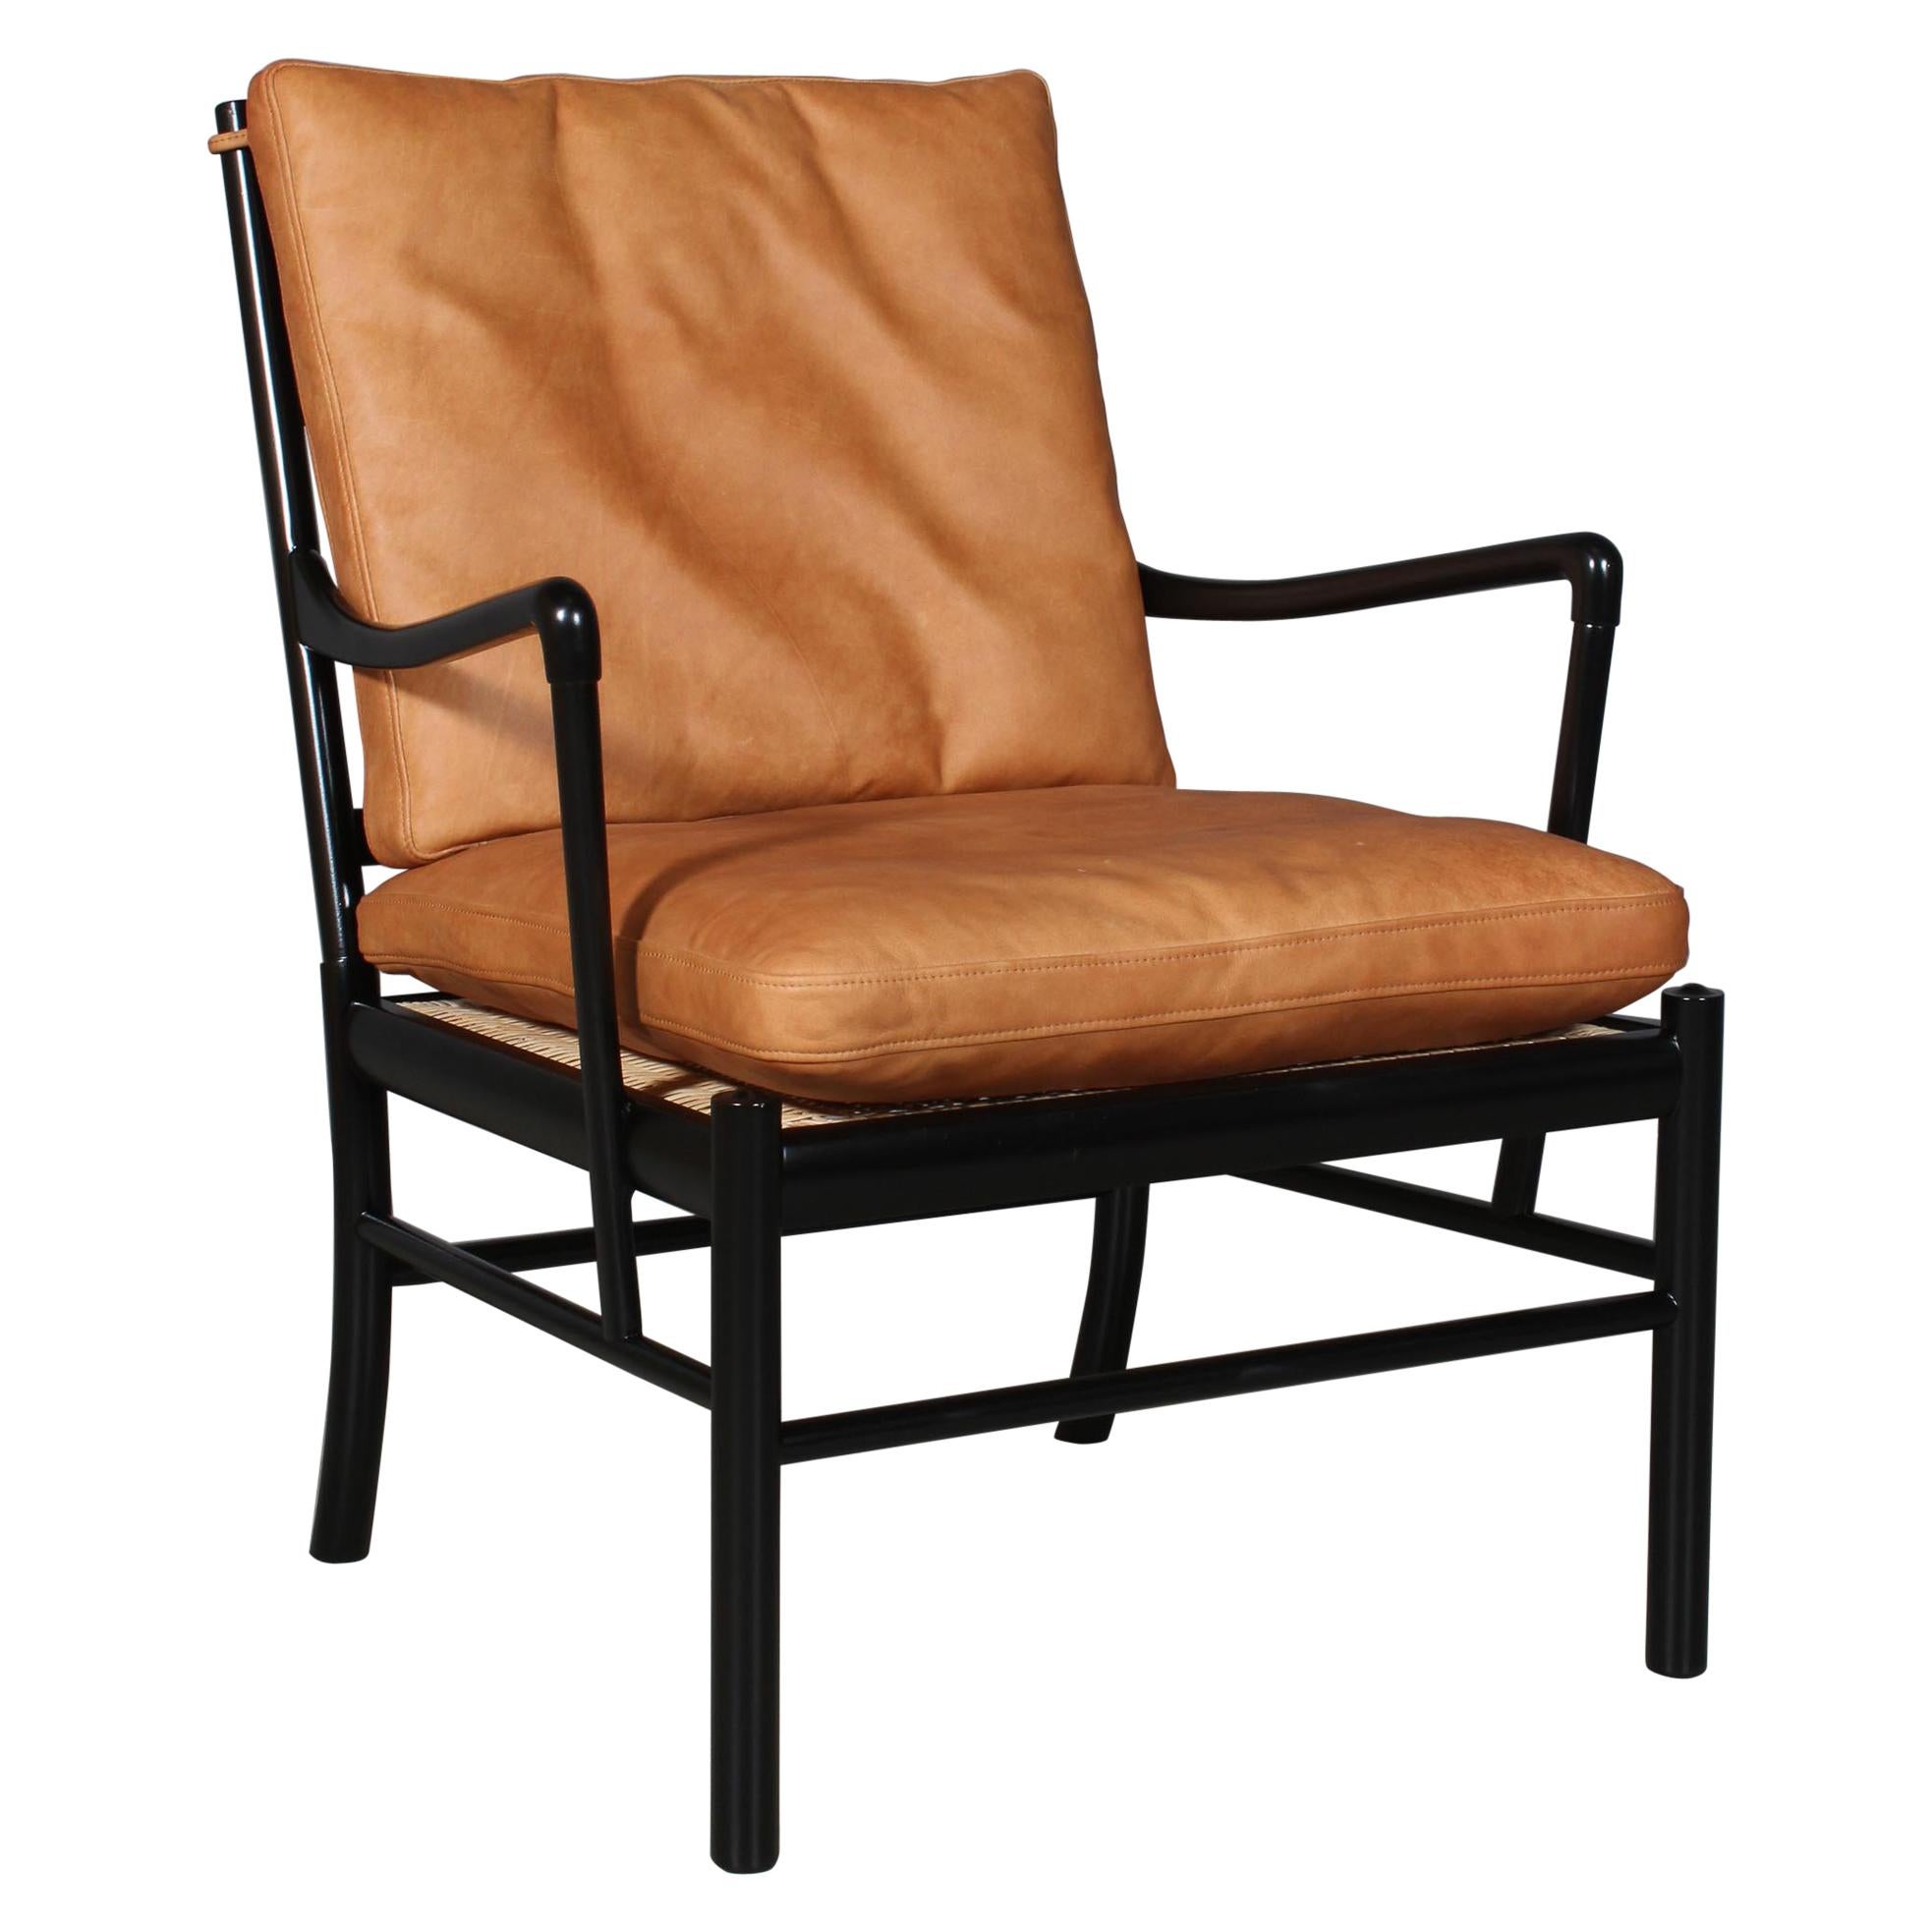 Ole Wanscher Colonial Chair